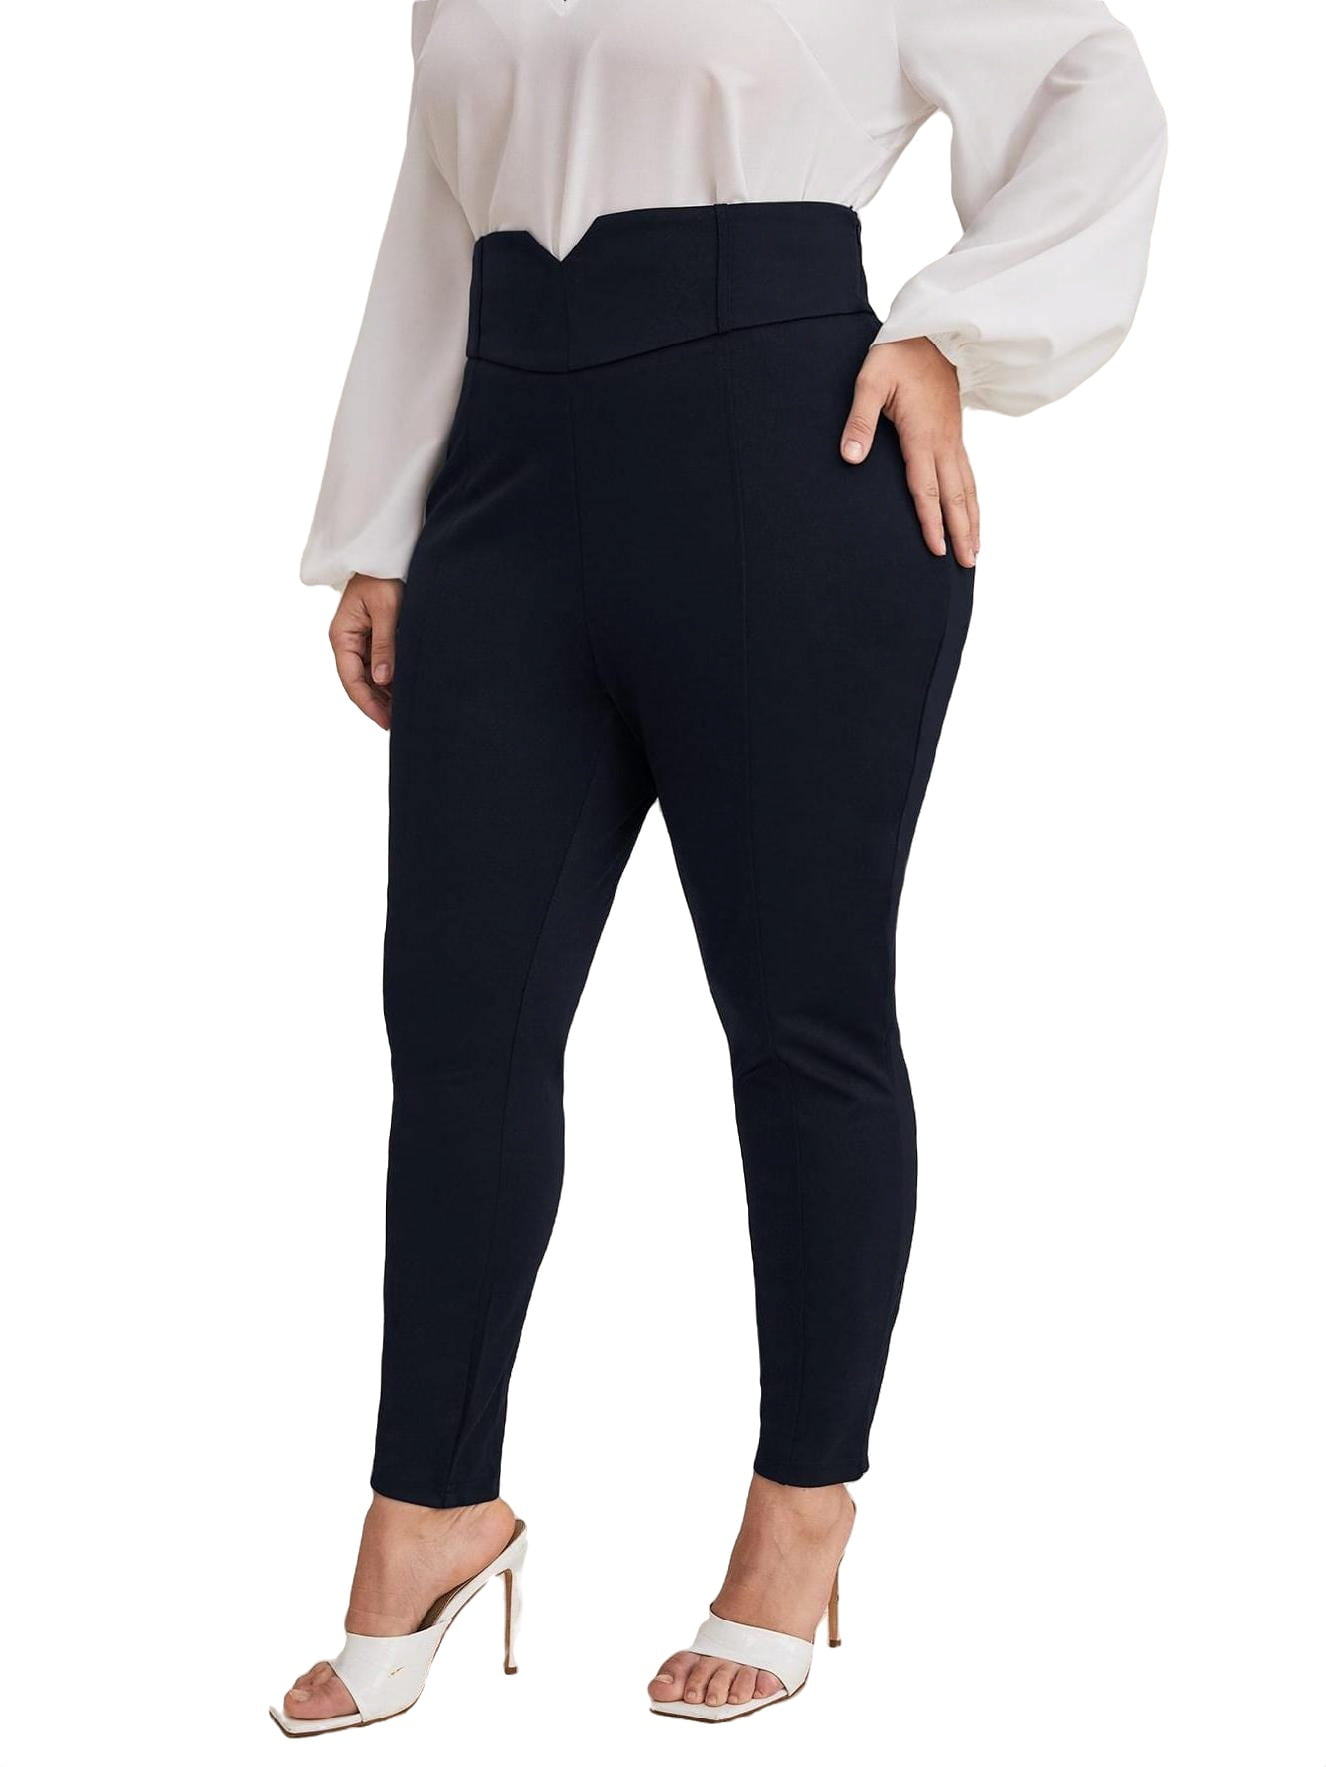 Elegant Solid Skinny Black Plus Size Pants (Women's) 